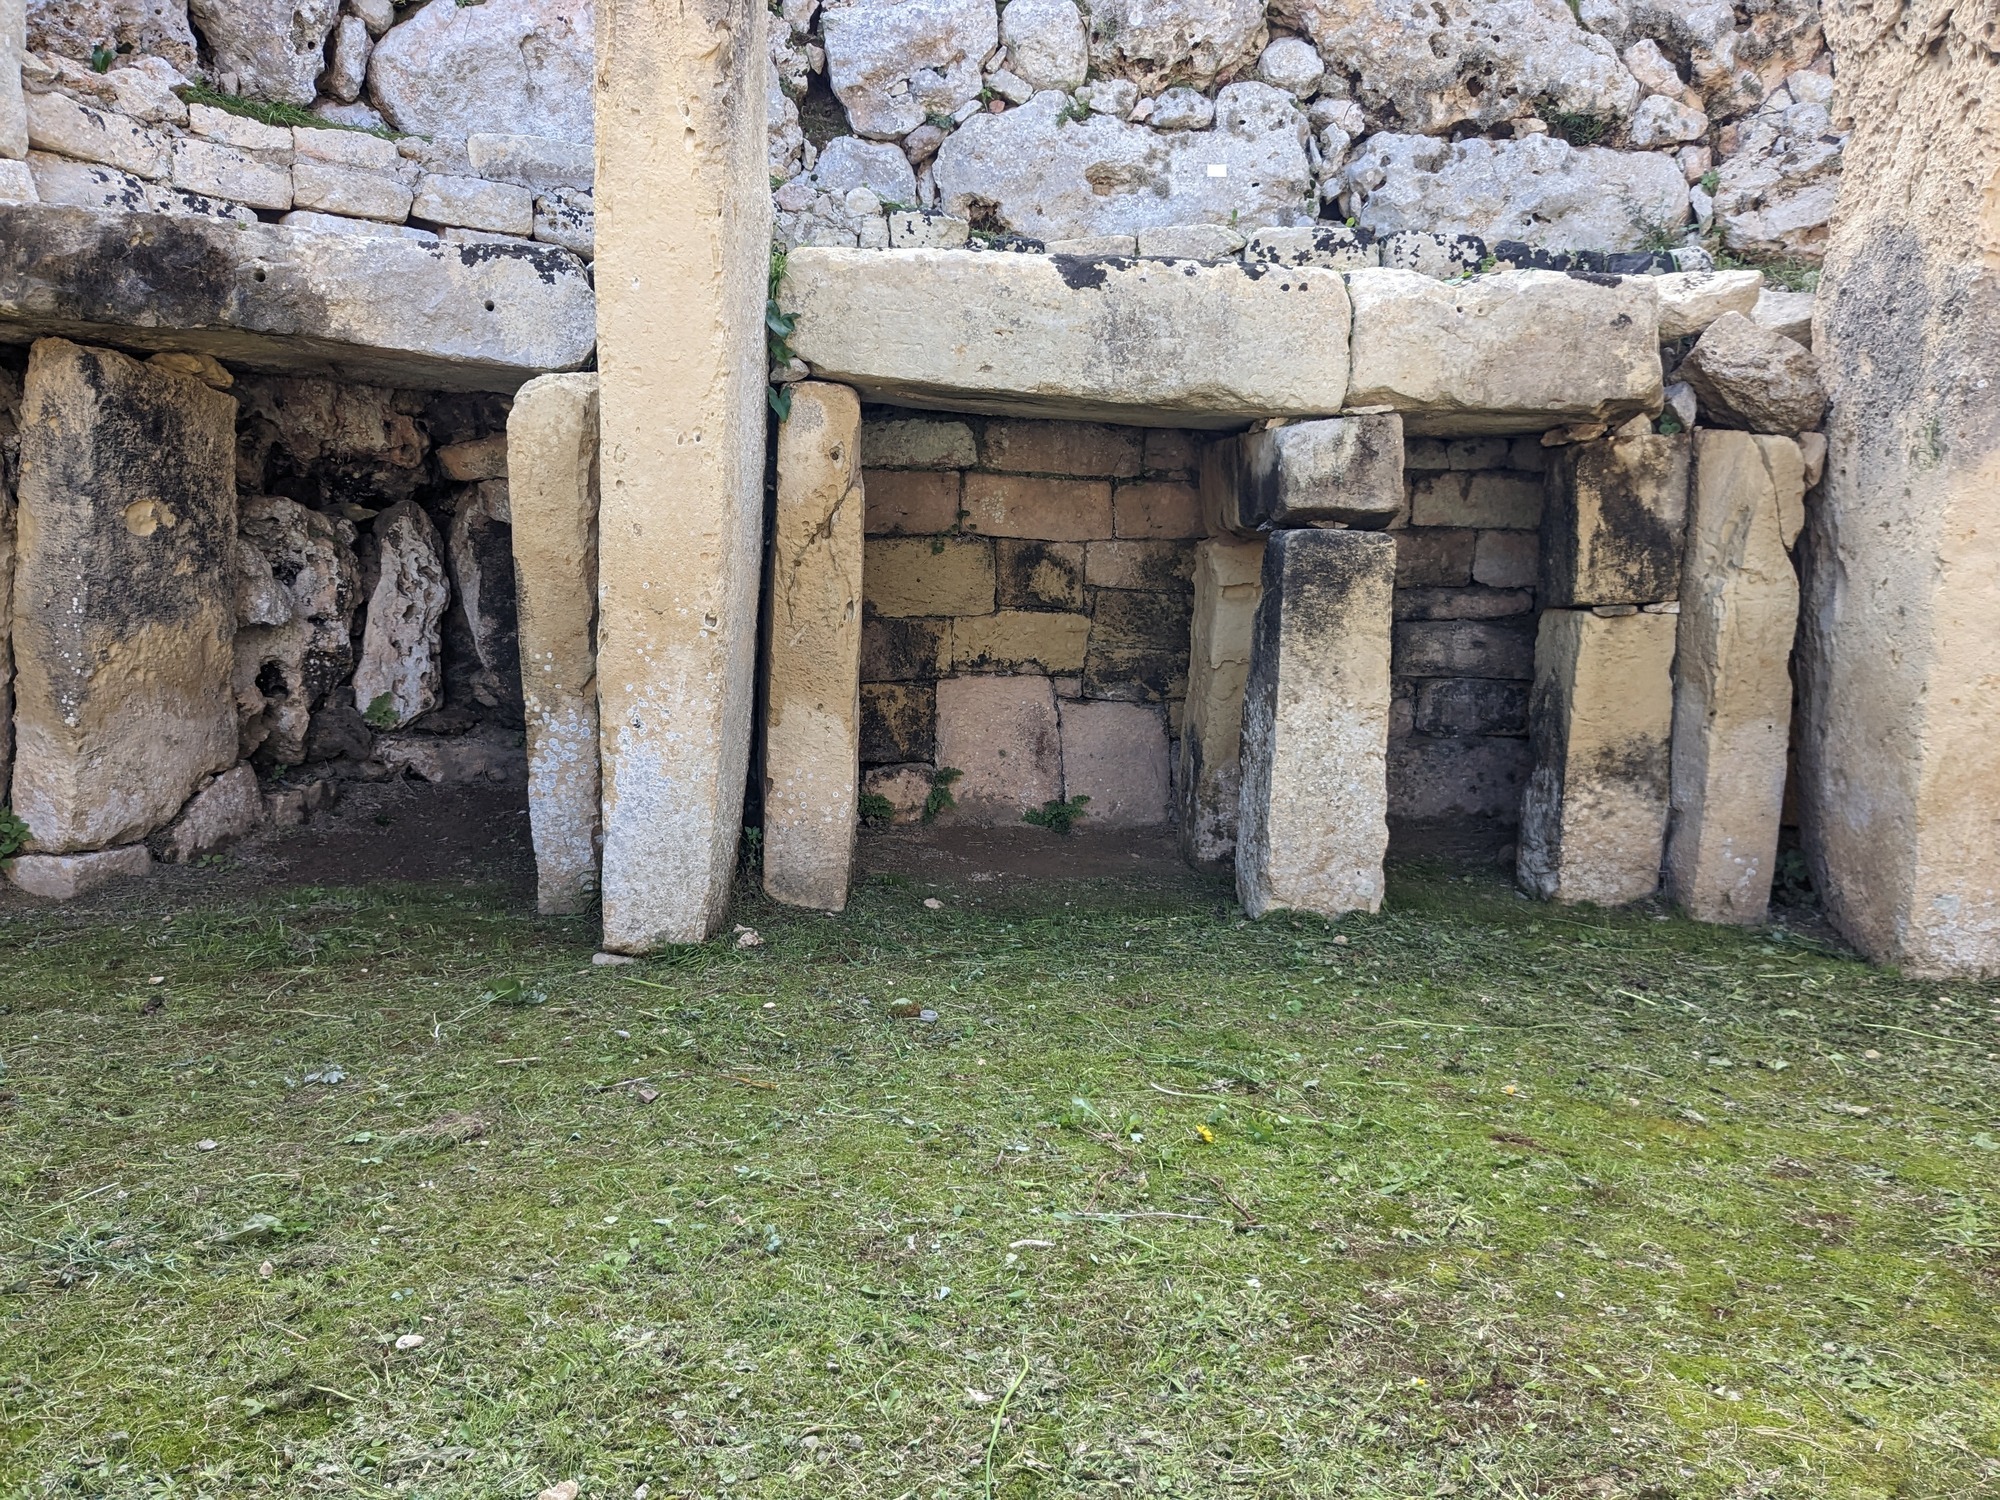 The Ġgantija Temples on Gozo, ~5600 years old